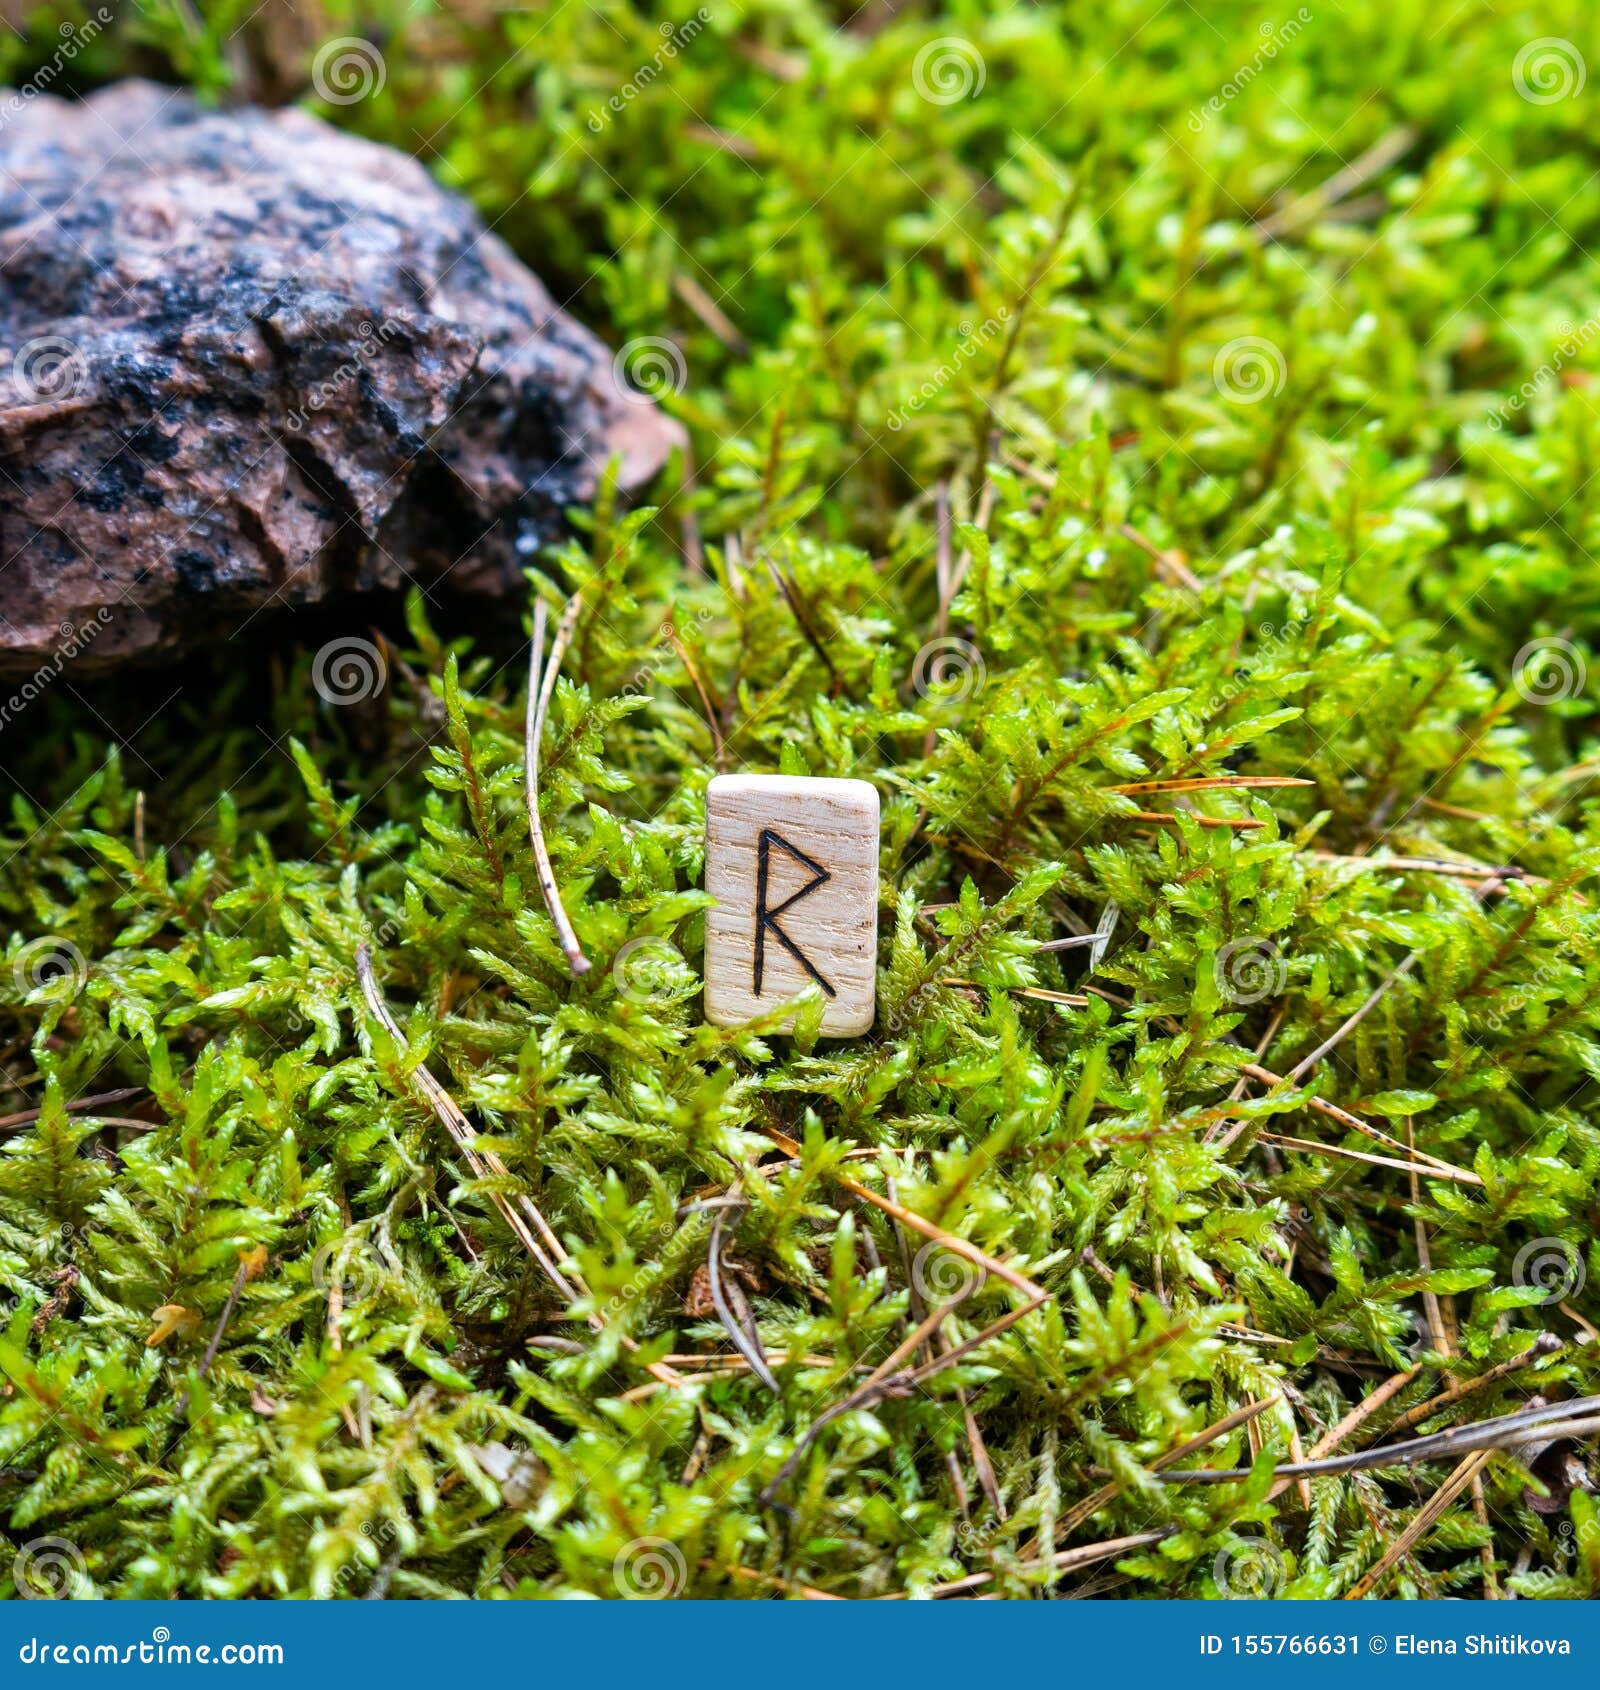 scandinavian rune raido, harbinger of travel, on wet moss.